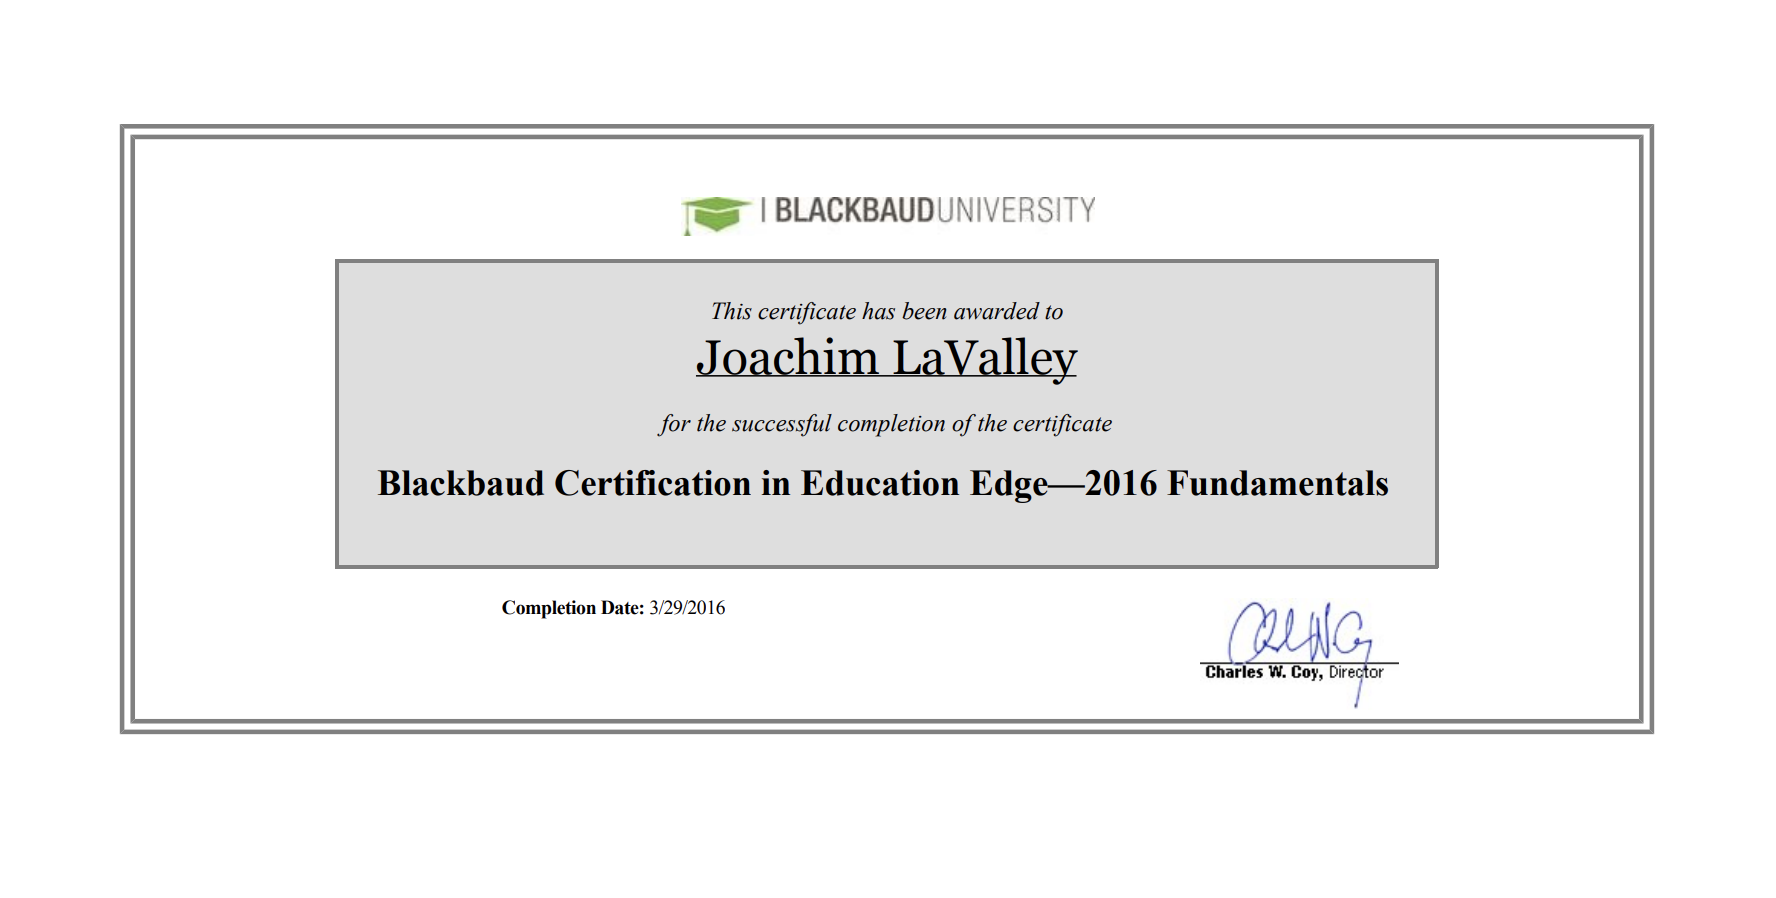 Blackbaud Certificates - Joachim LaValley